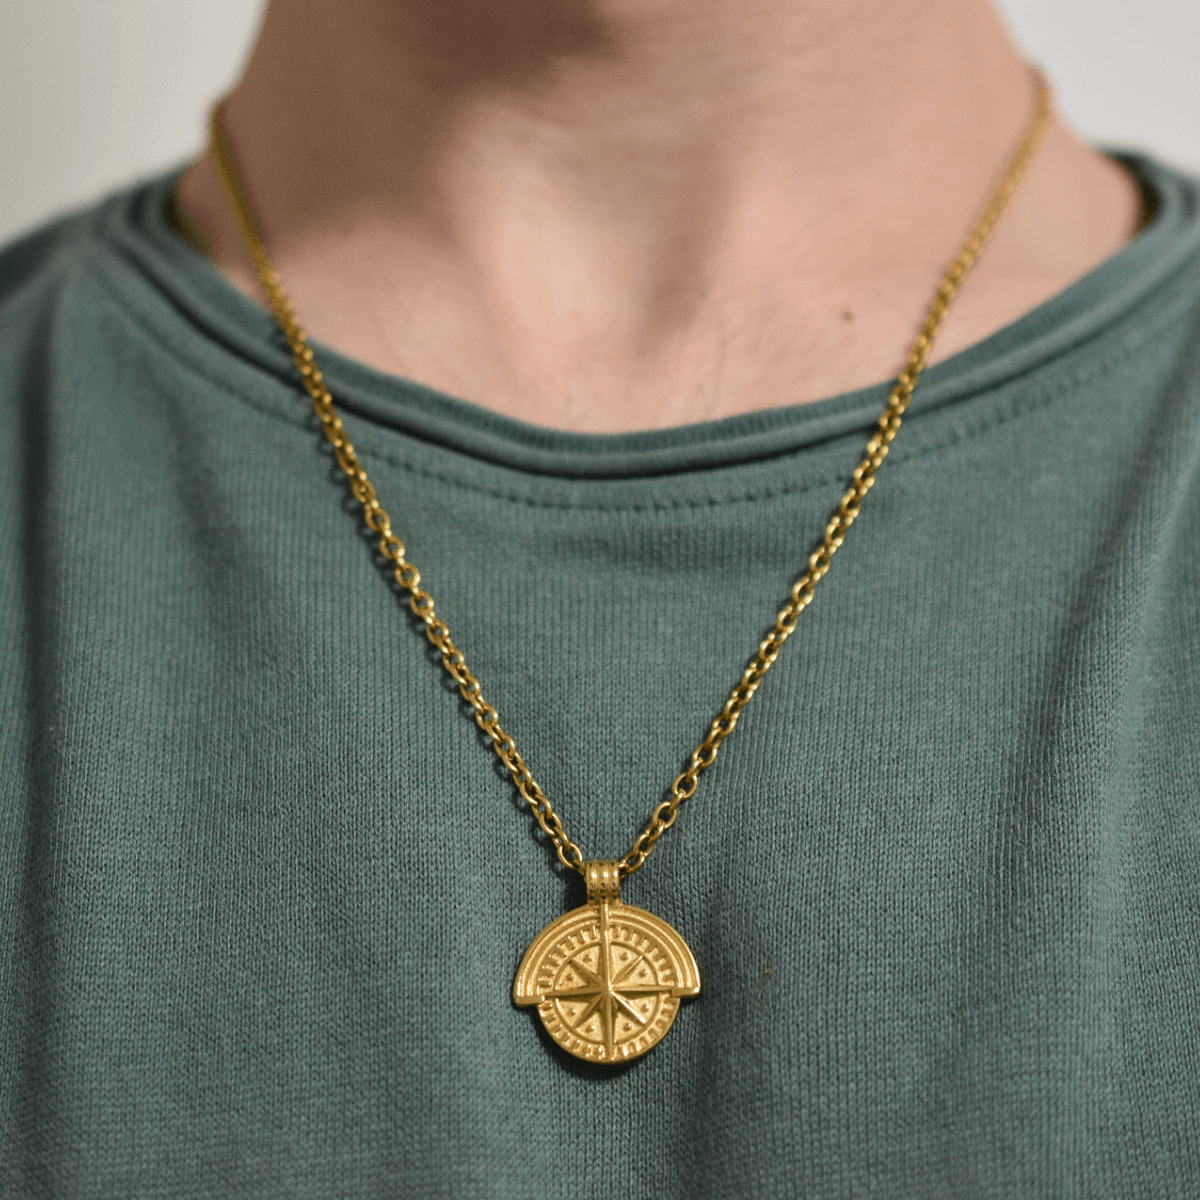 Compass Pendant - Gold